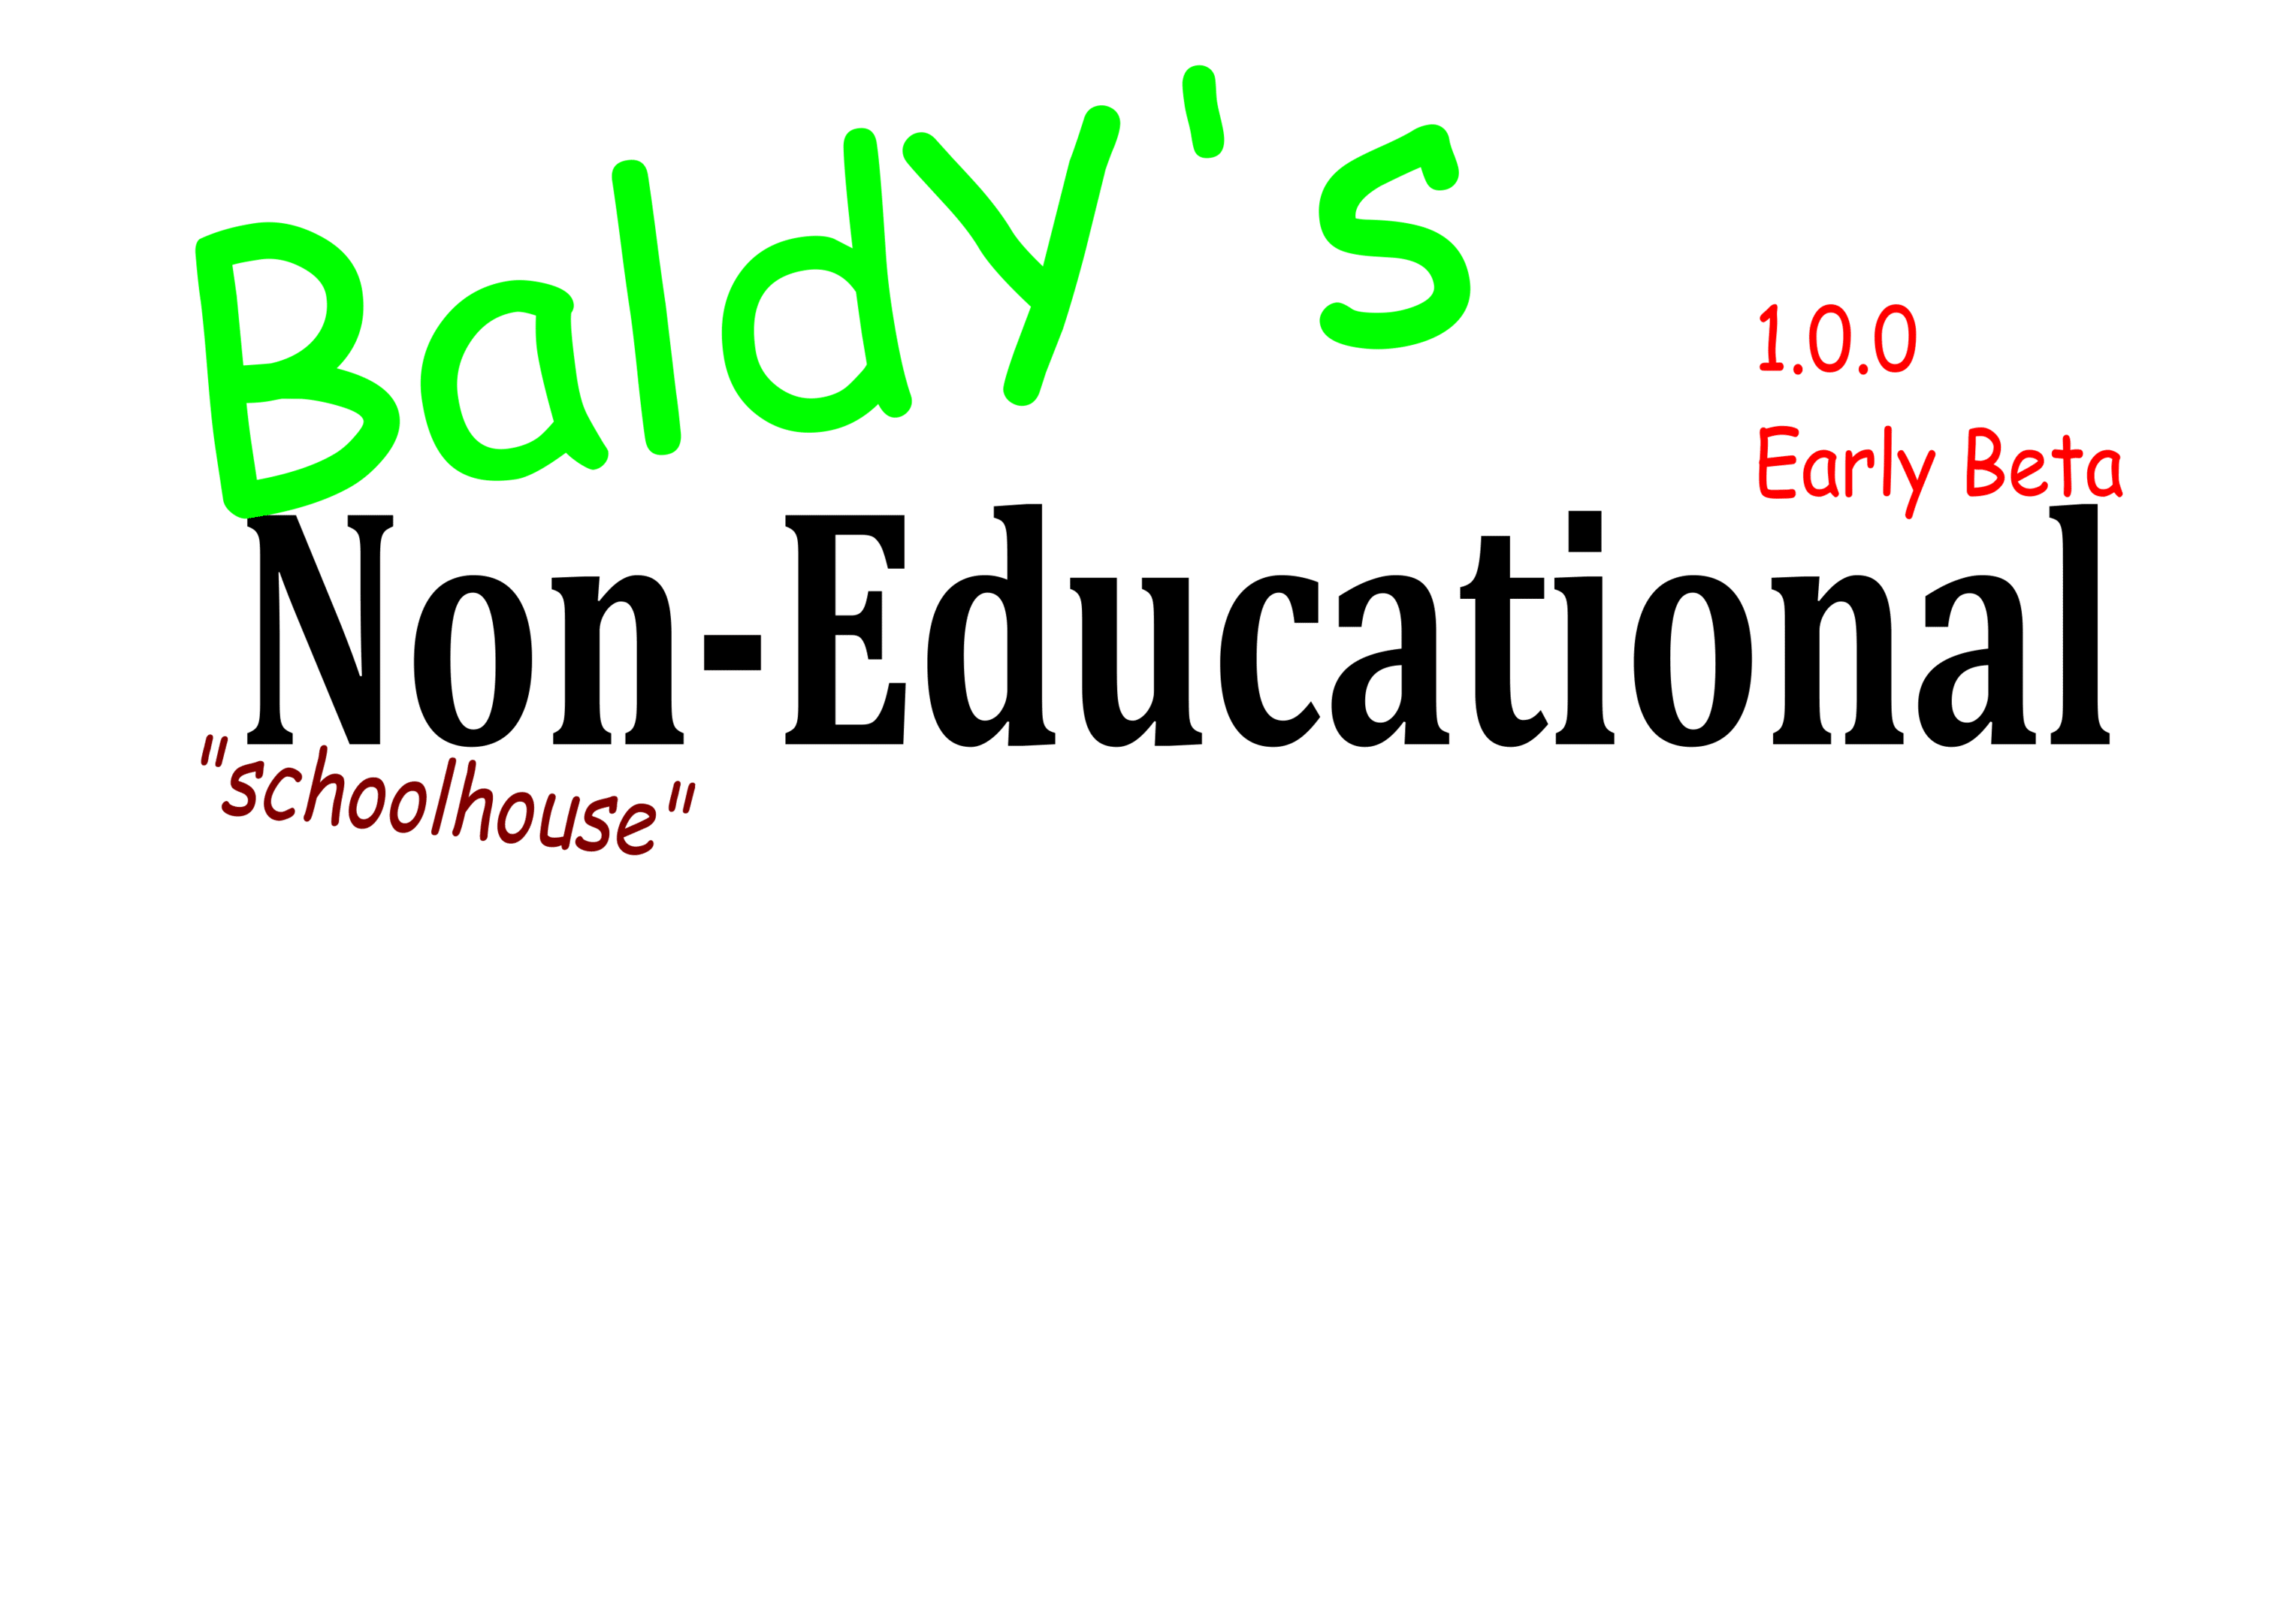 Baldy's Non-Educational "schoolhouse"